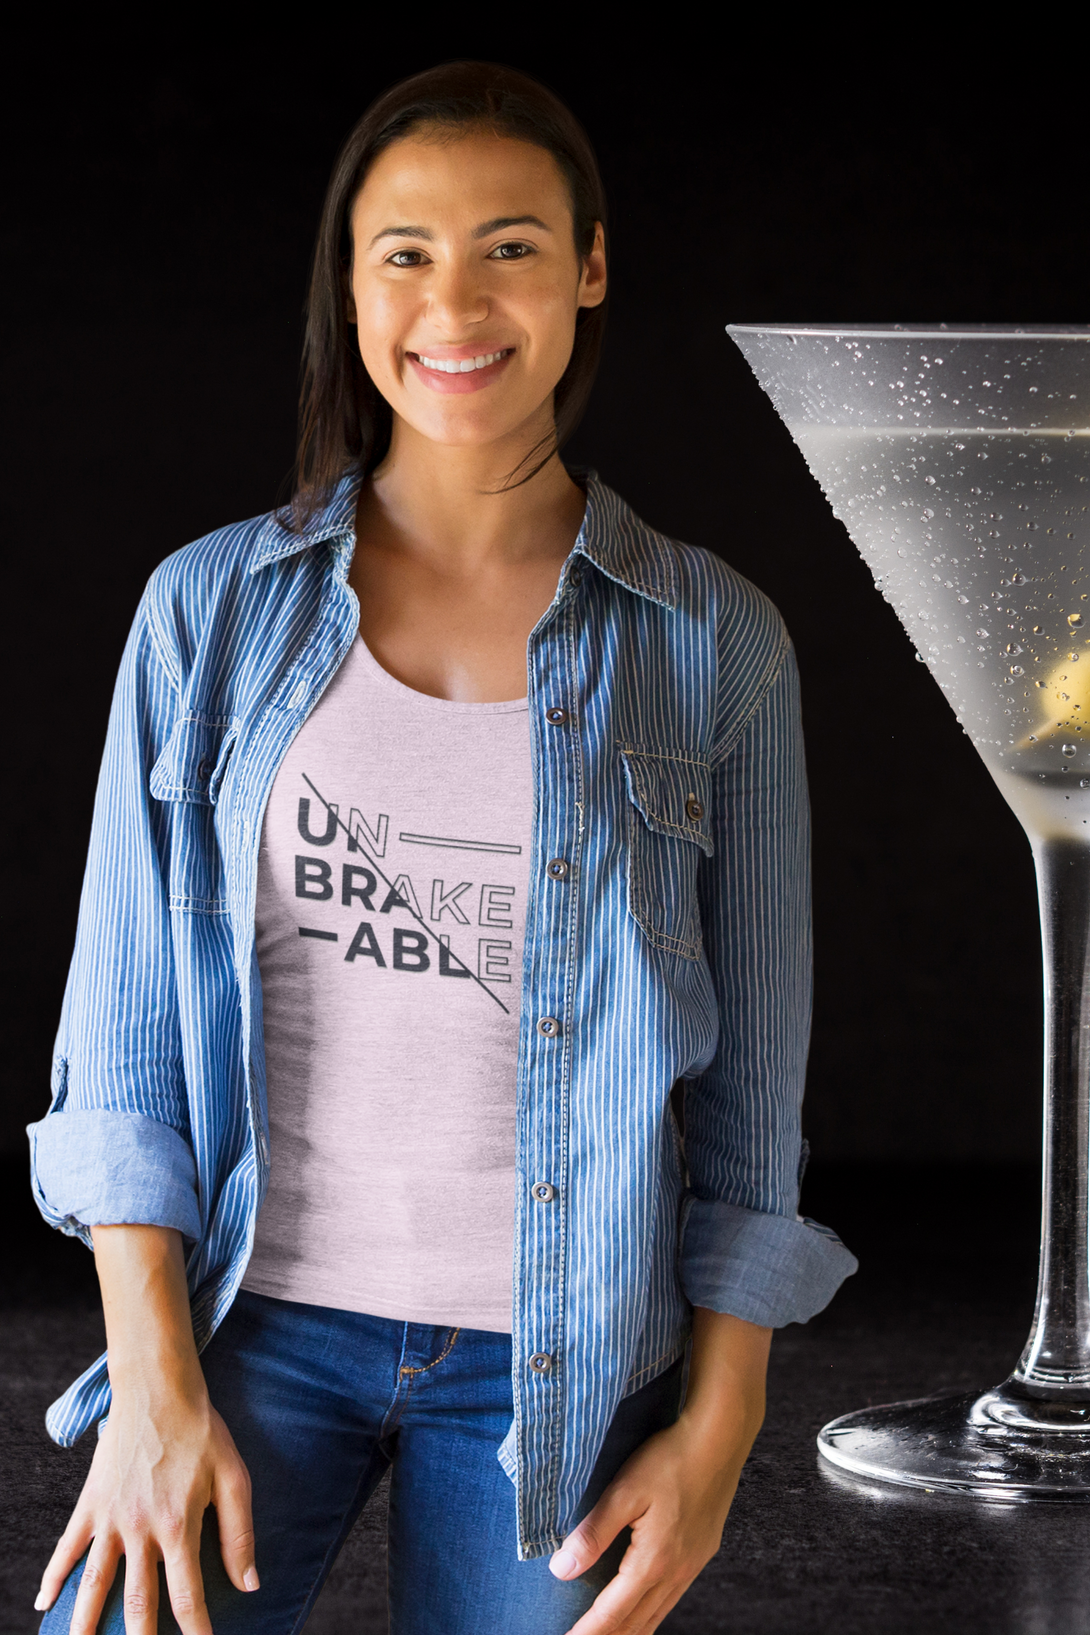 Unbreakable Printed Scoop Neck T-Shirt For Women - WowWaves - 4